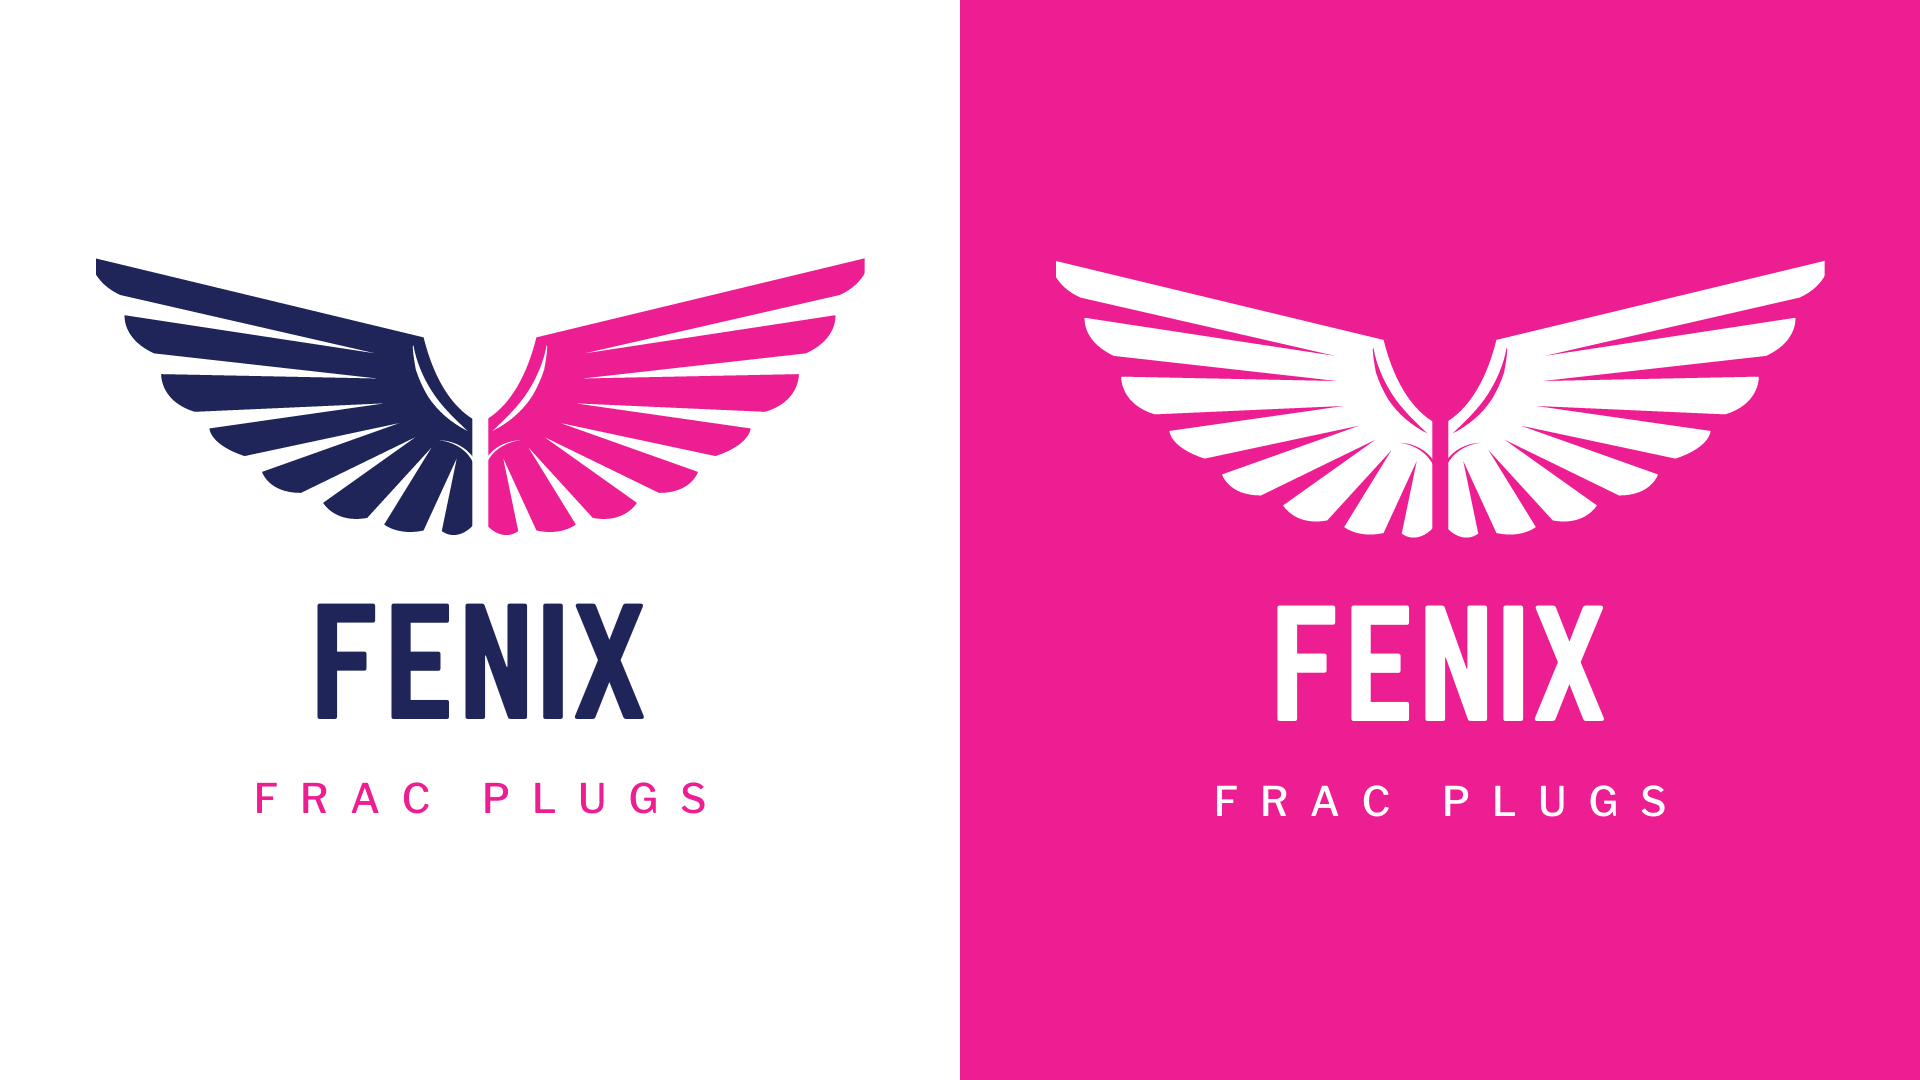 Brand Guidelines - FENIX